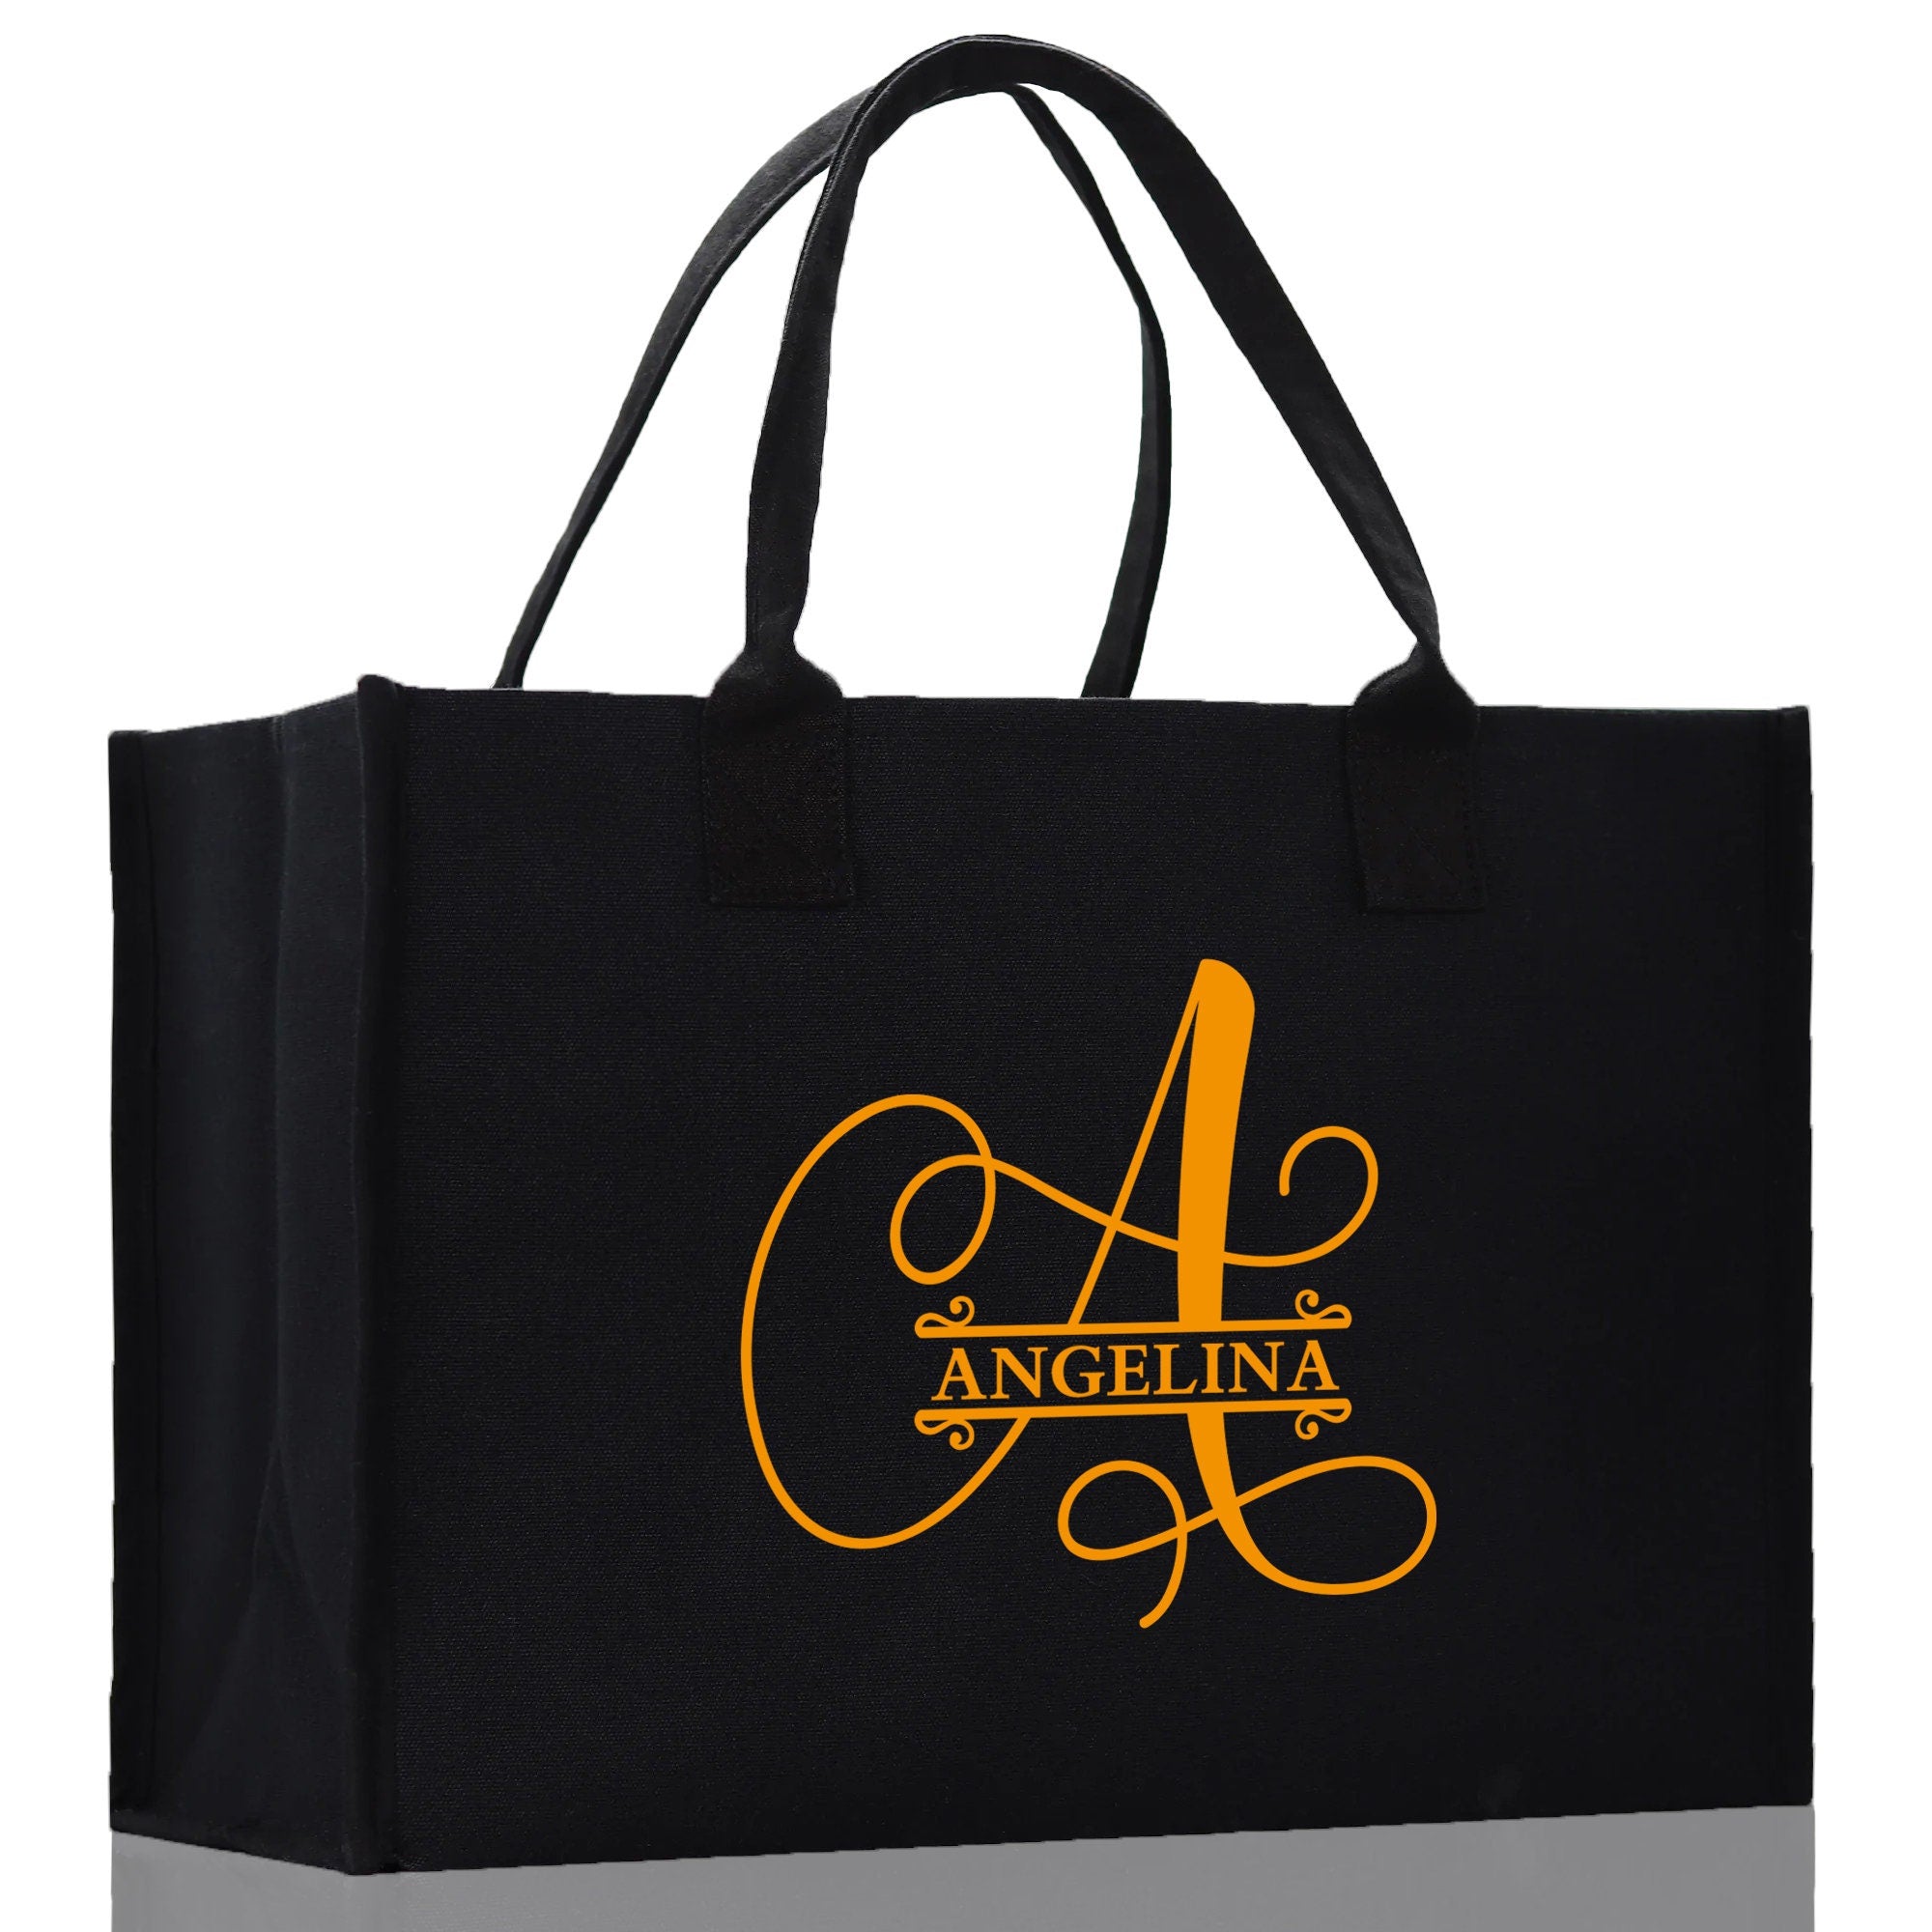 a black shopping bag with an orange logo